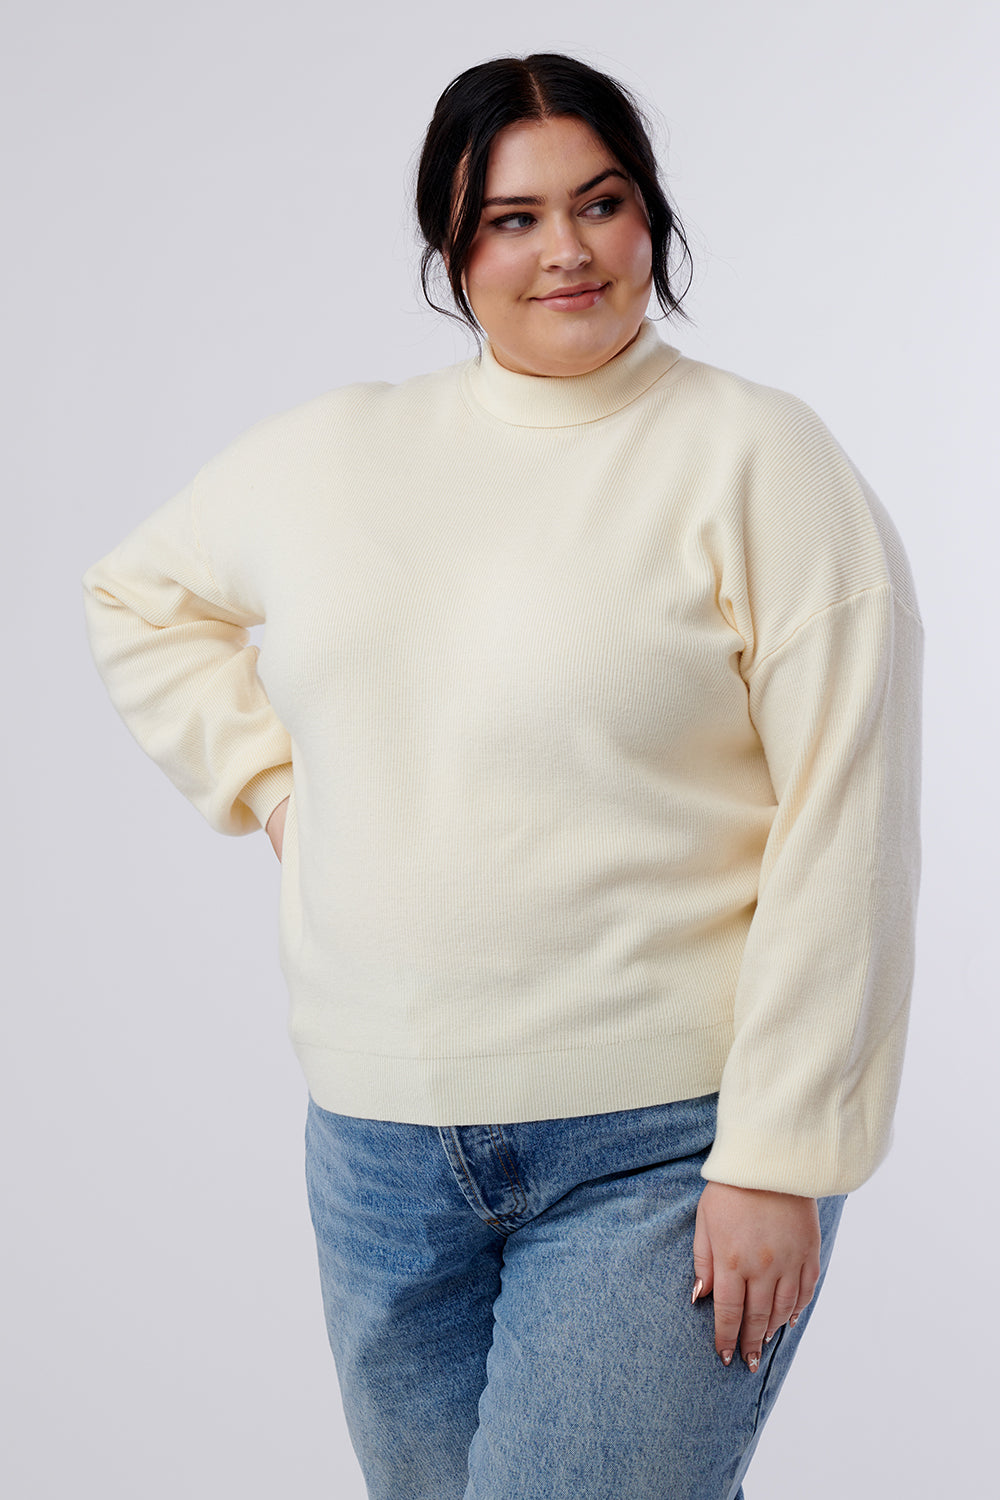 Jane Turtleneck Sweater Top